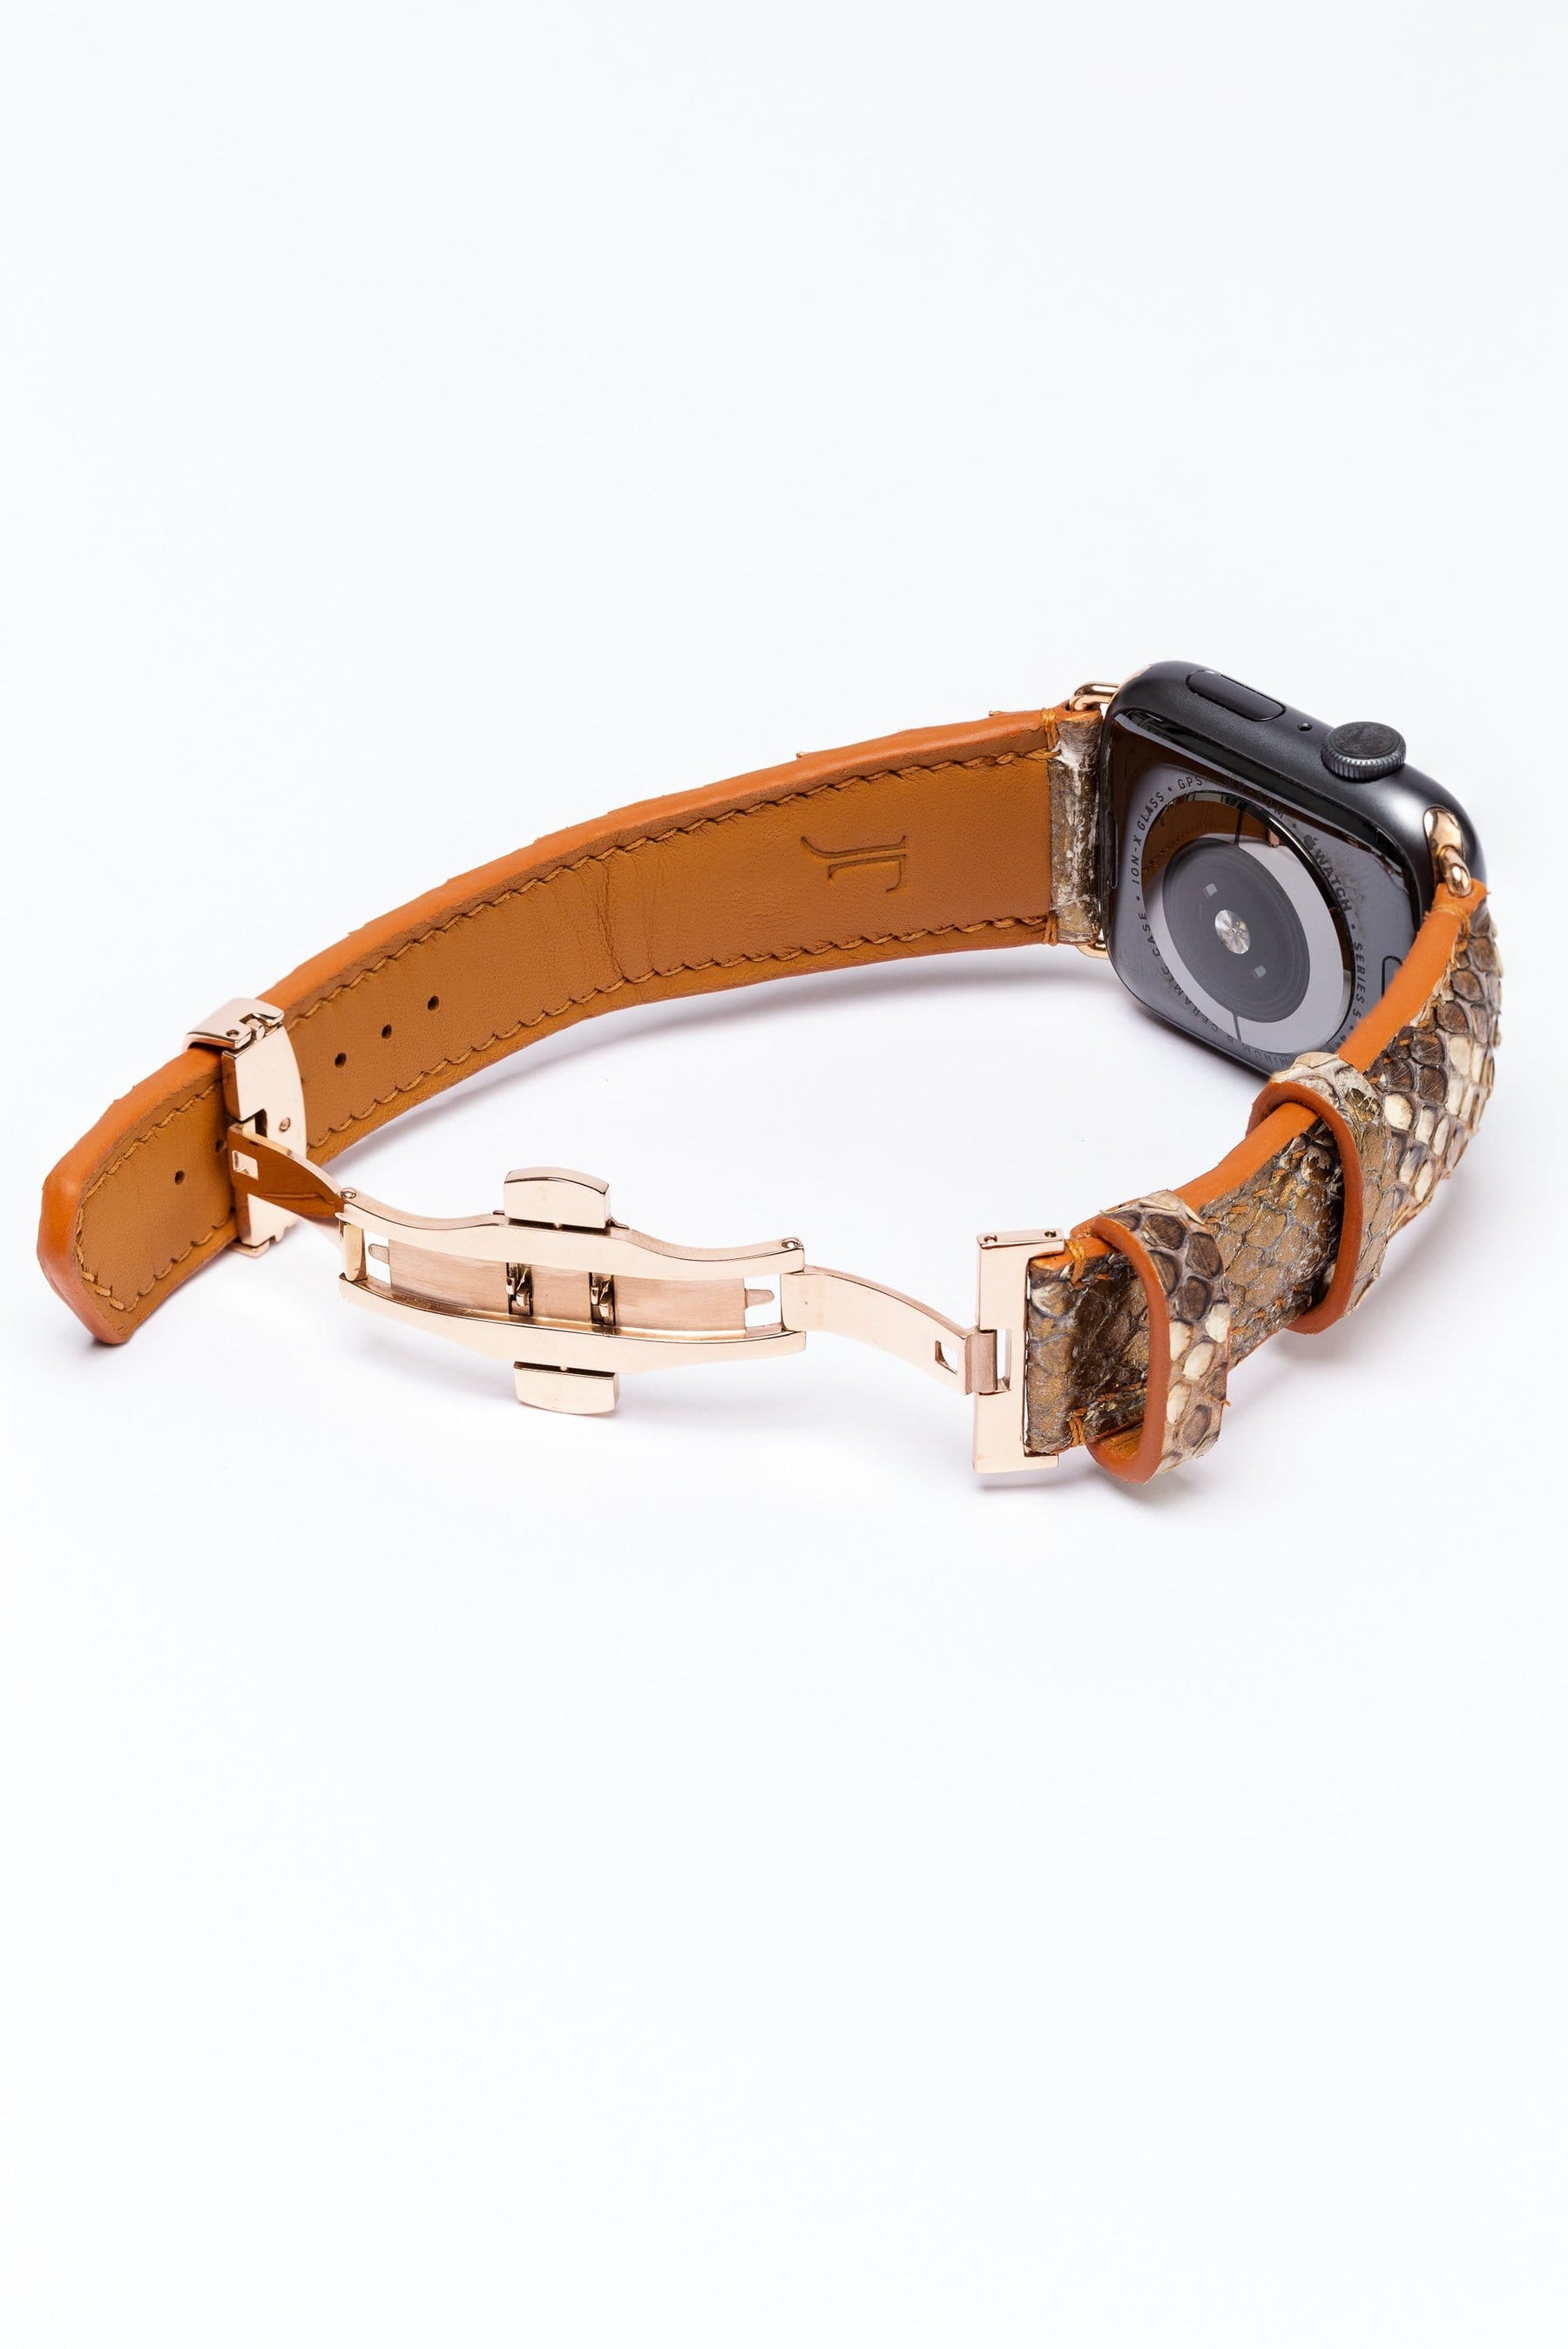 Tamagini Leather  Luxury Apple Watch Strap 44mm Denim Blue Osrtich | Tamagini Leather